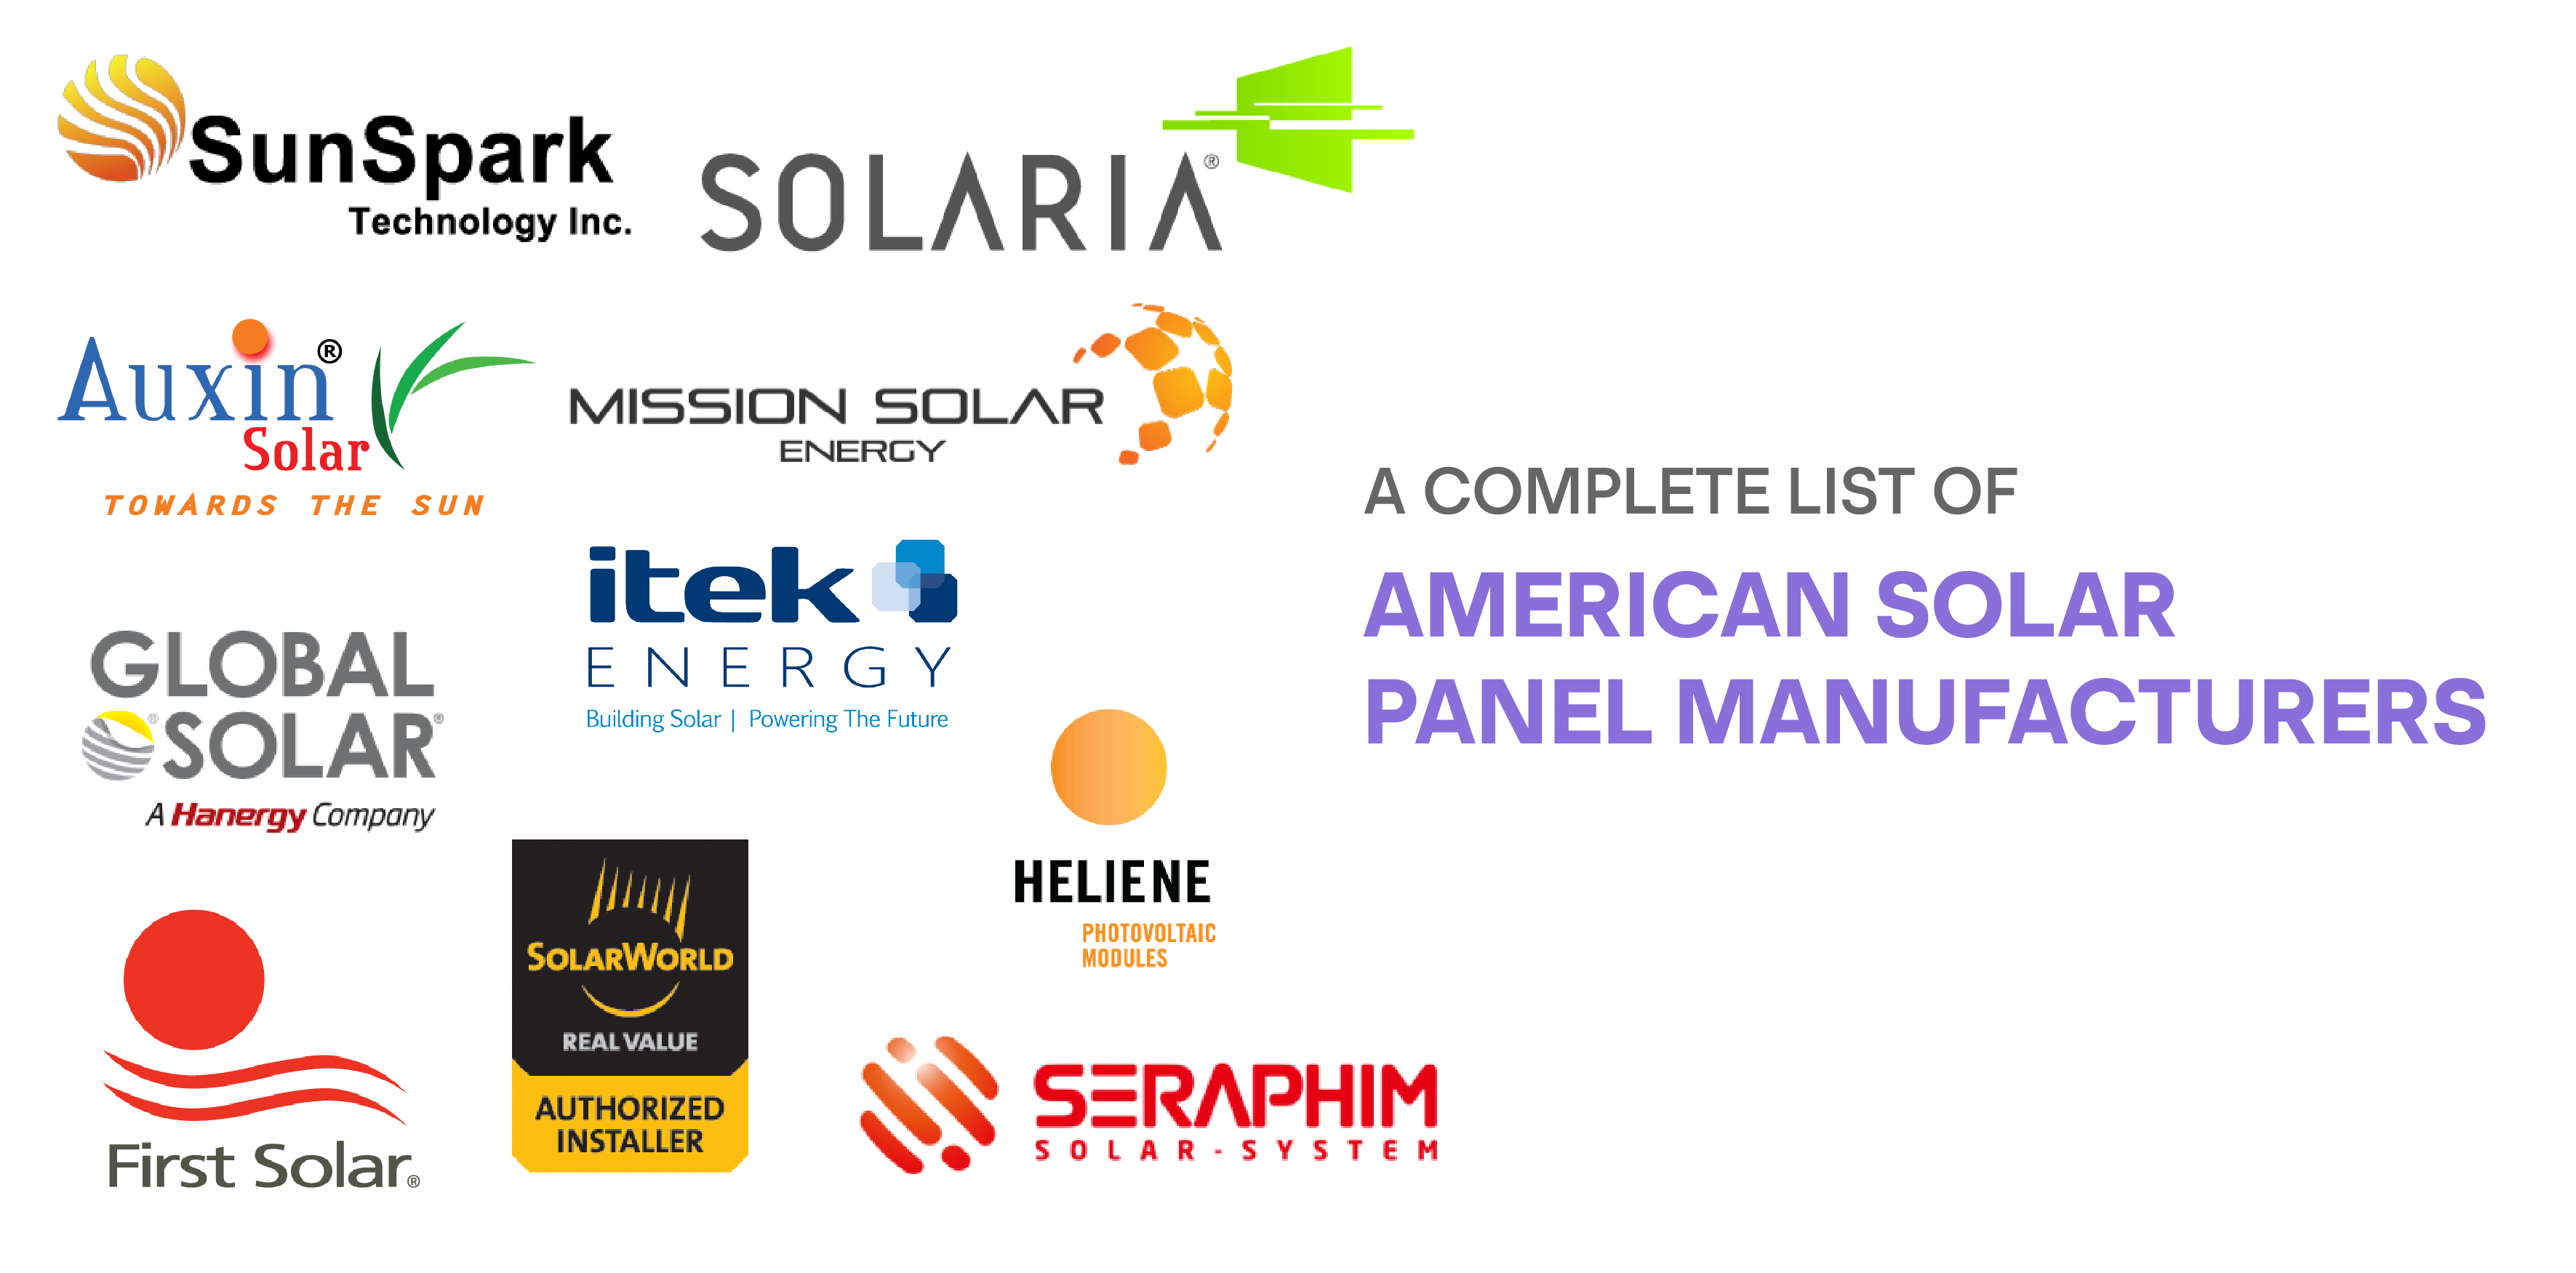 How do I find a good solar company?